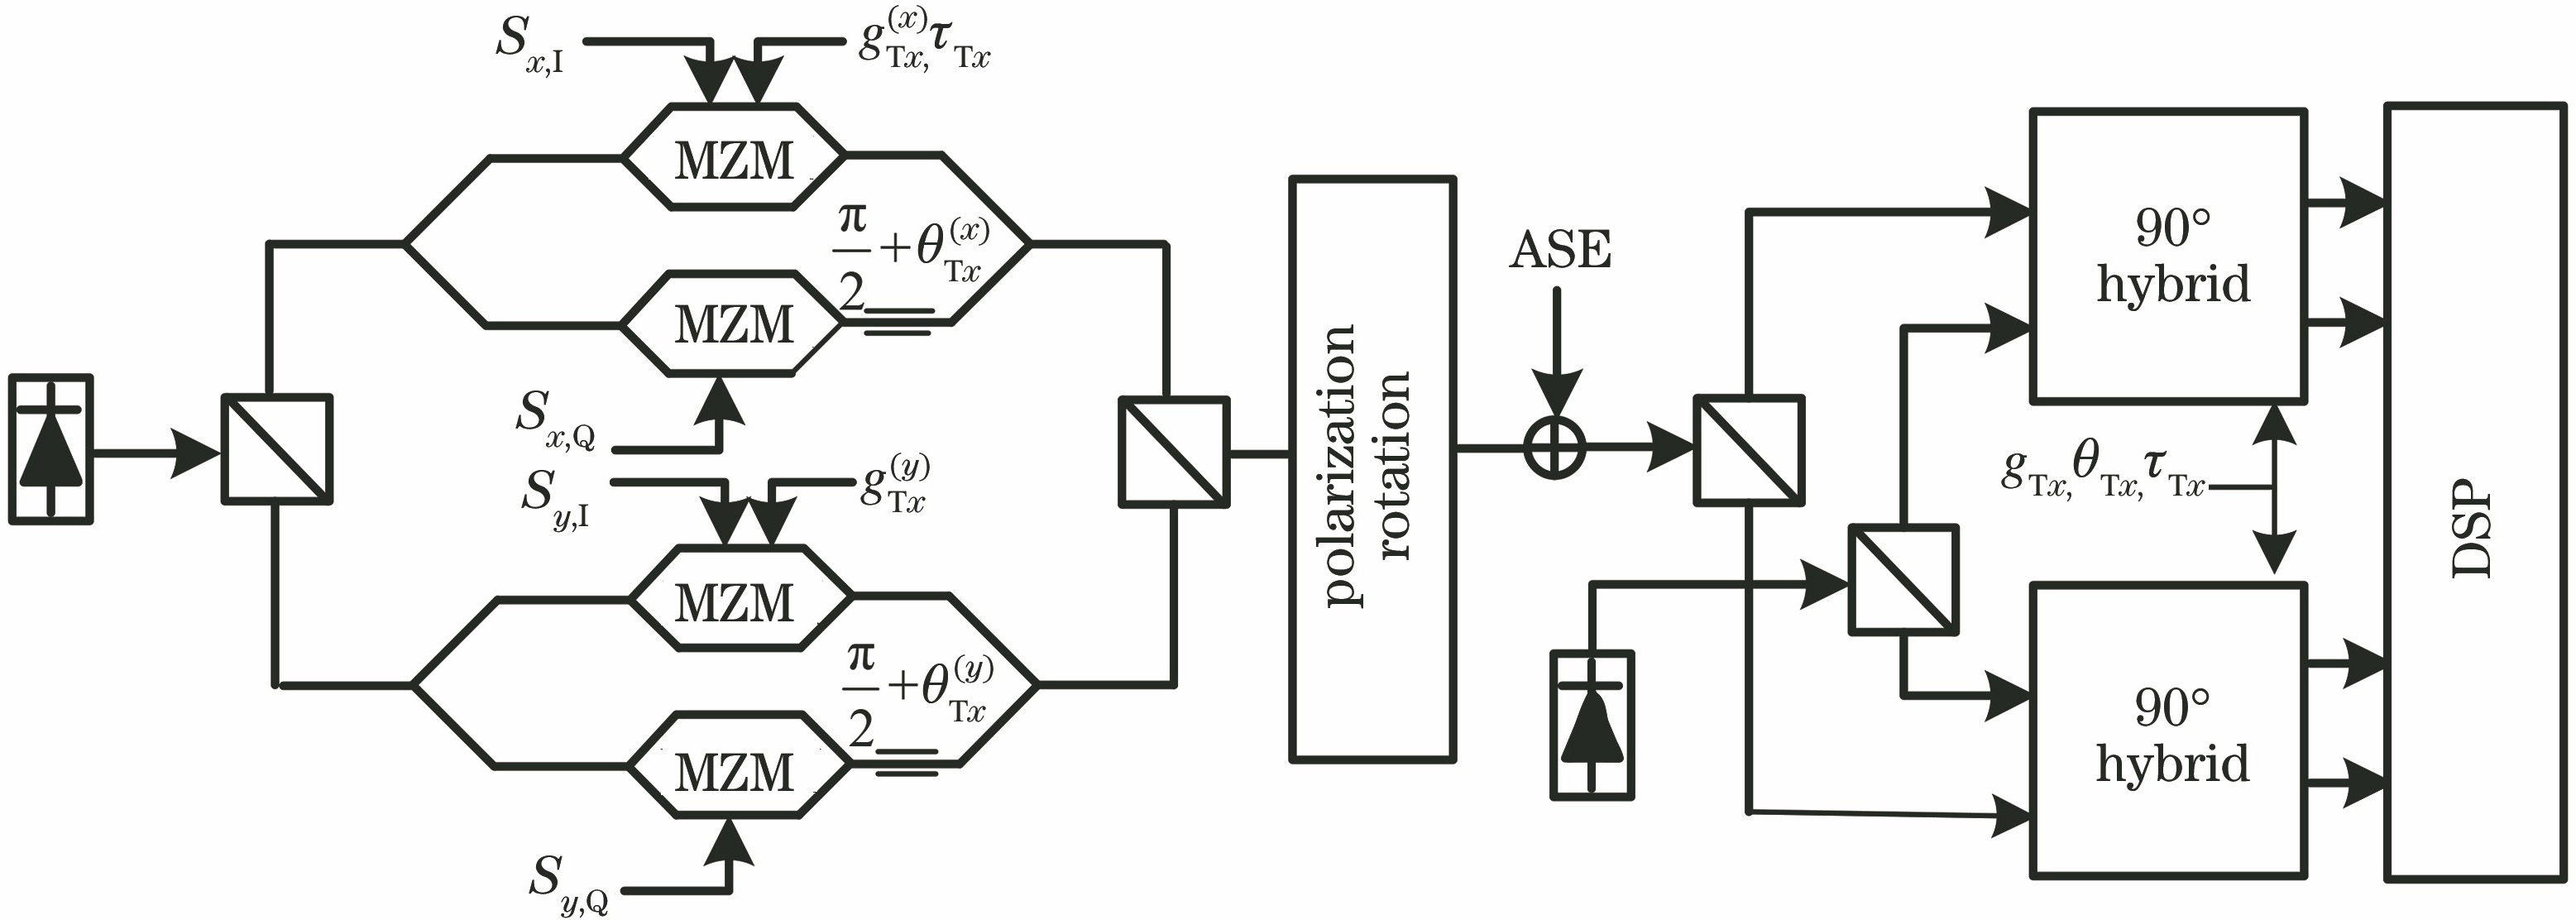 Simulation system of optical transmission